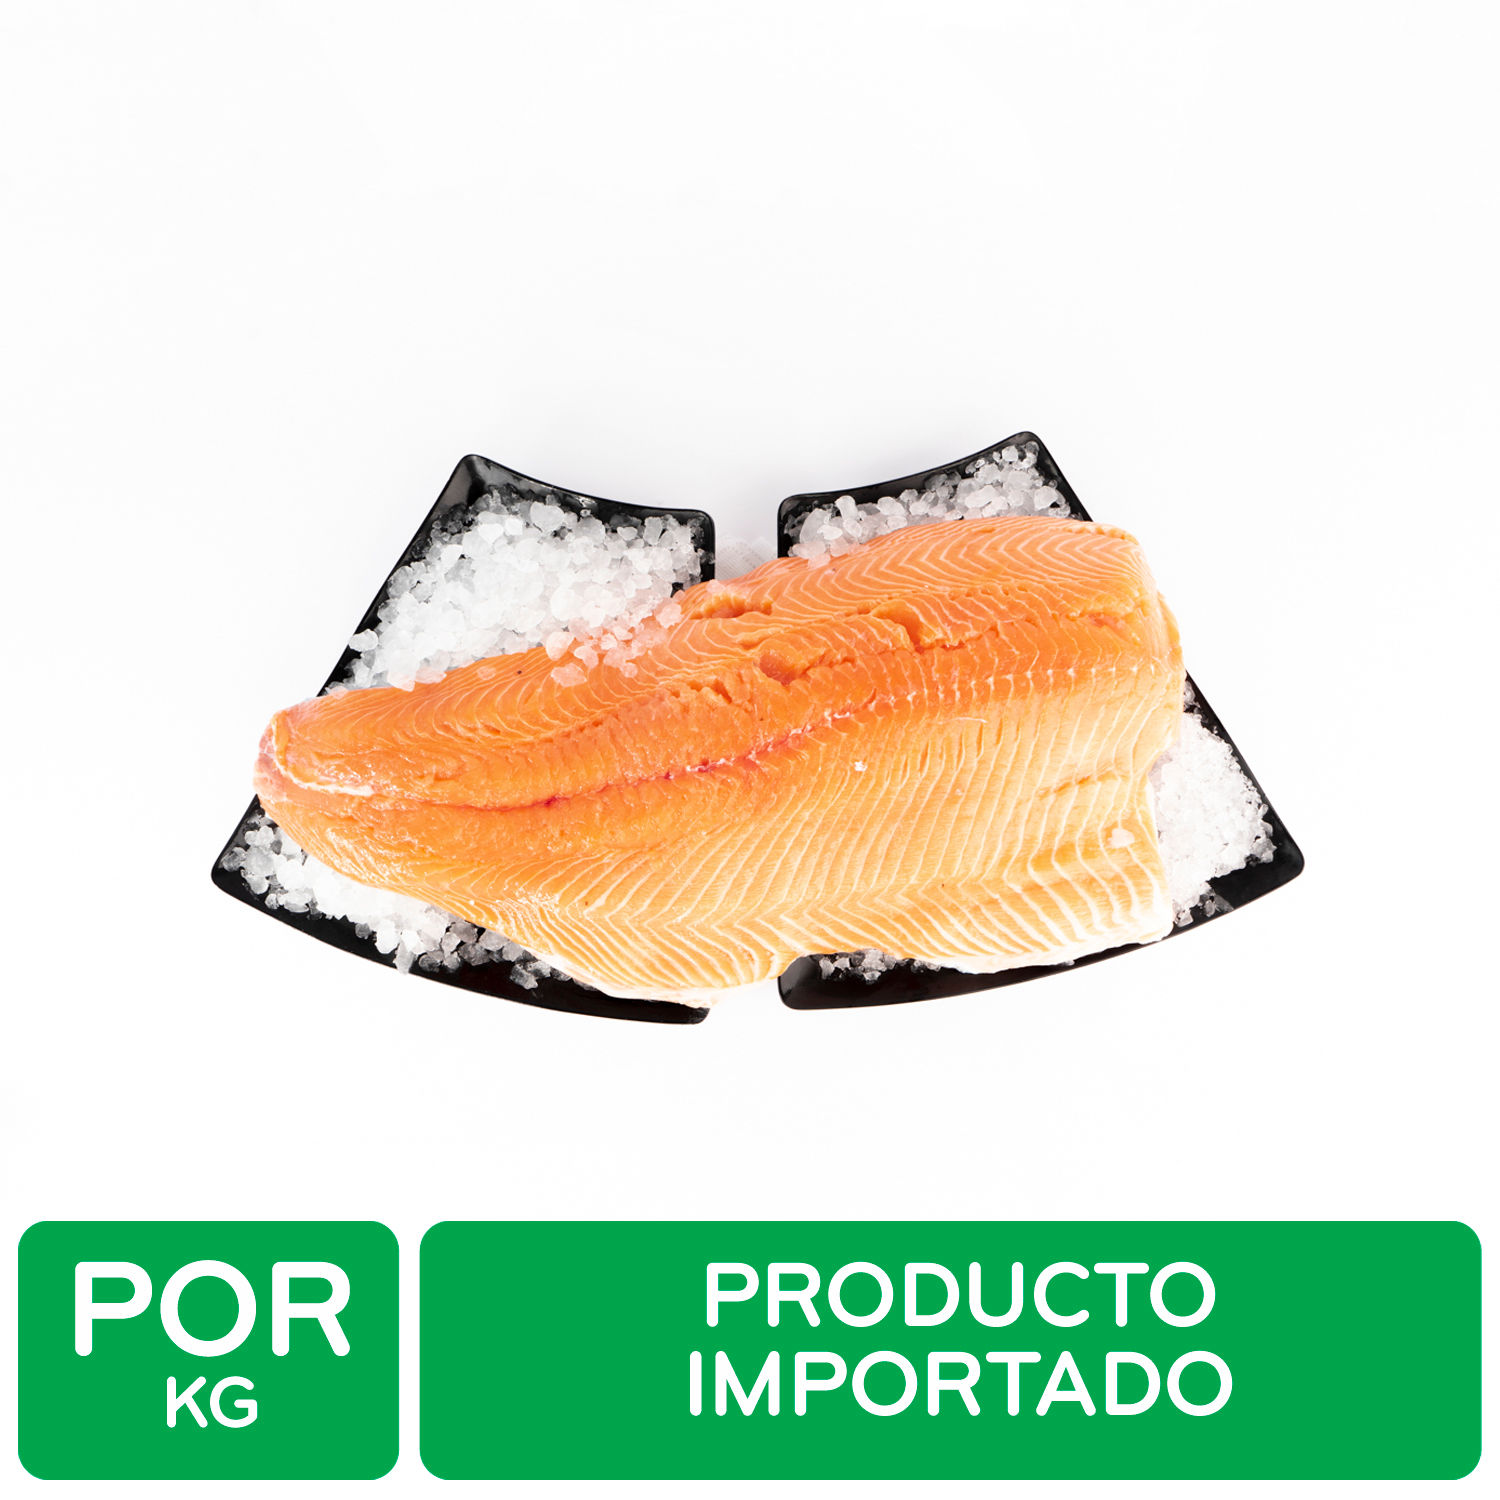 Salmon Chileno Fresco Aquicola Ultra Premium Auto Mercado Kilogramo